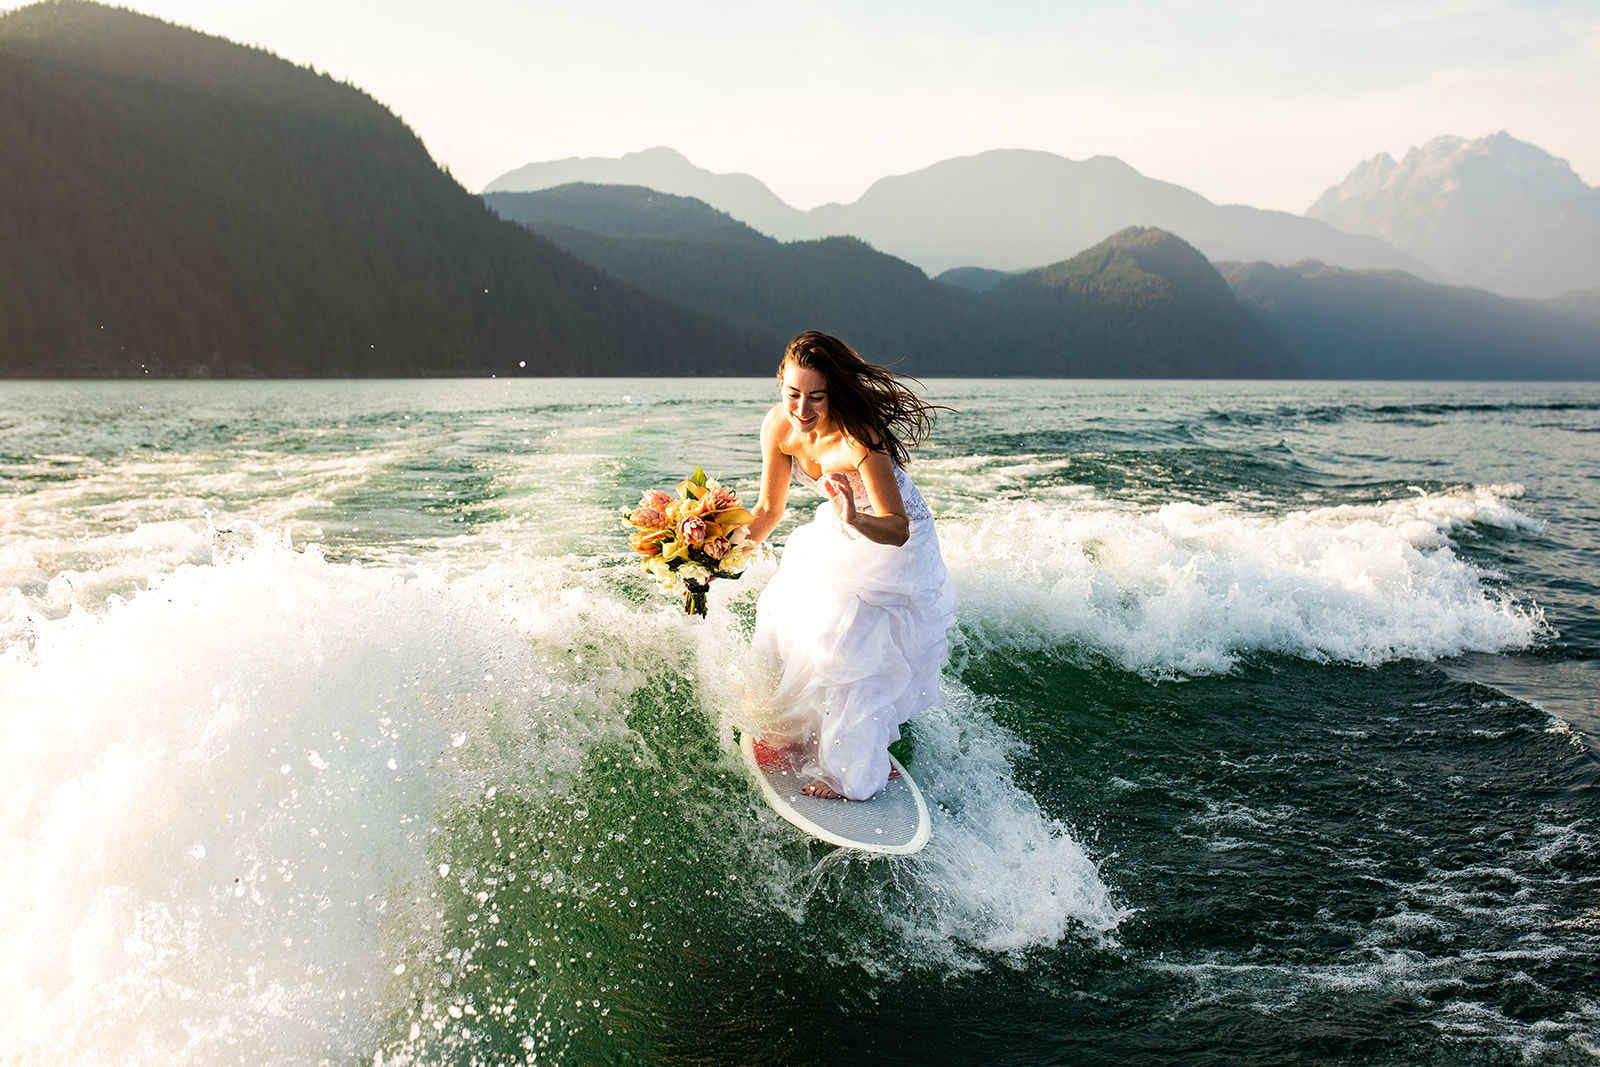 Surfer Bride Adventure on Vancouver Lake holds bouquet 